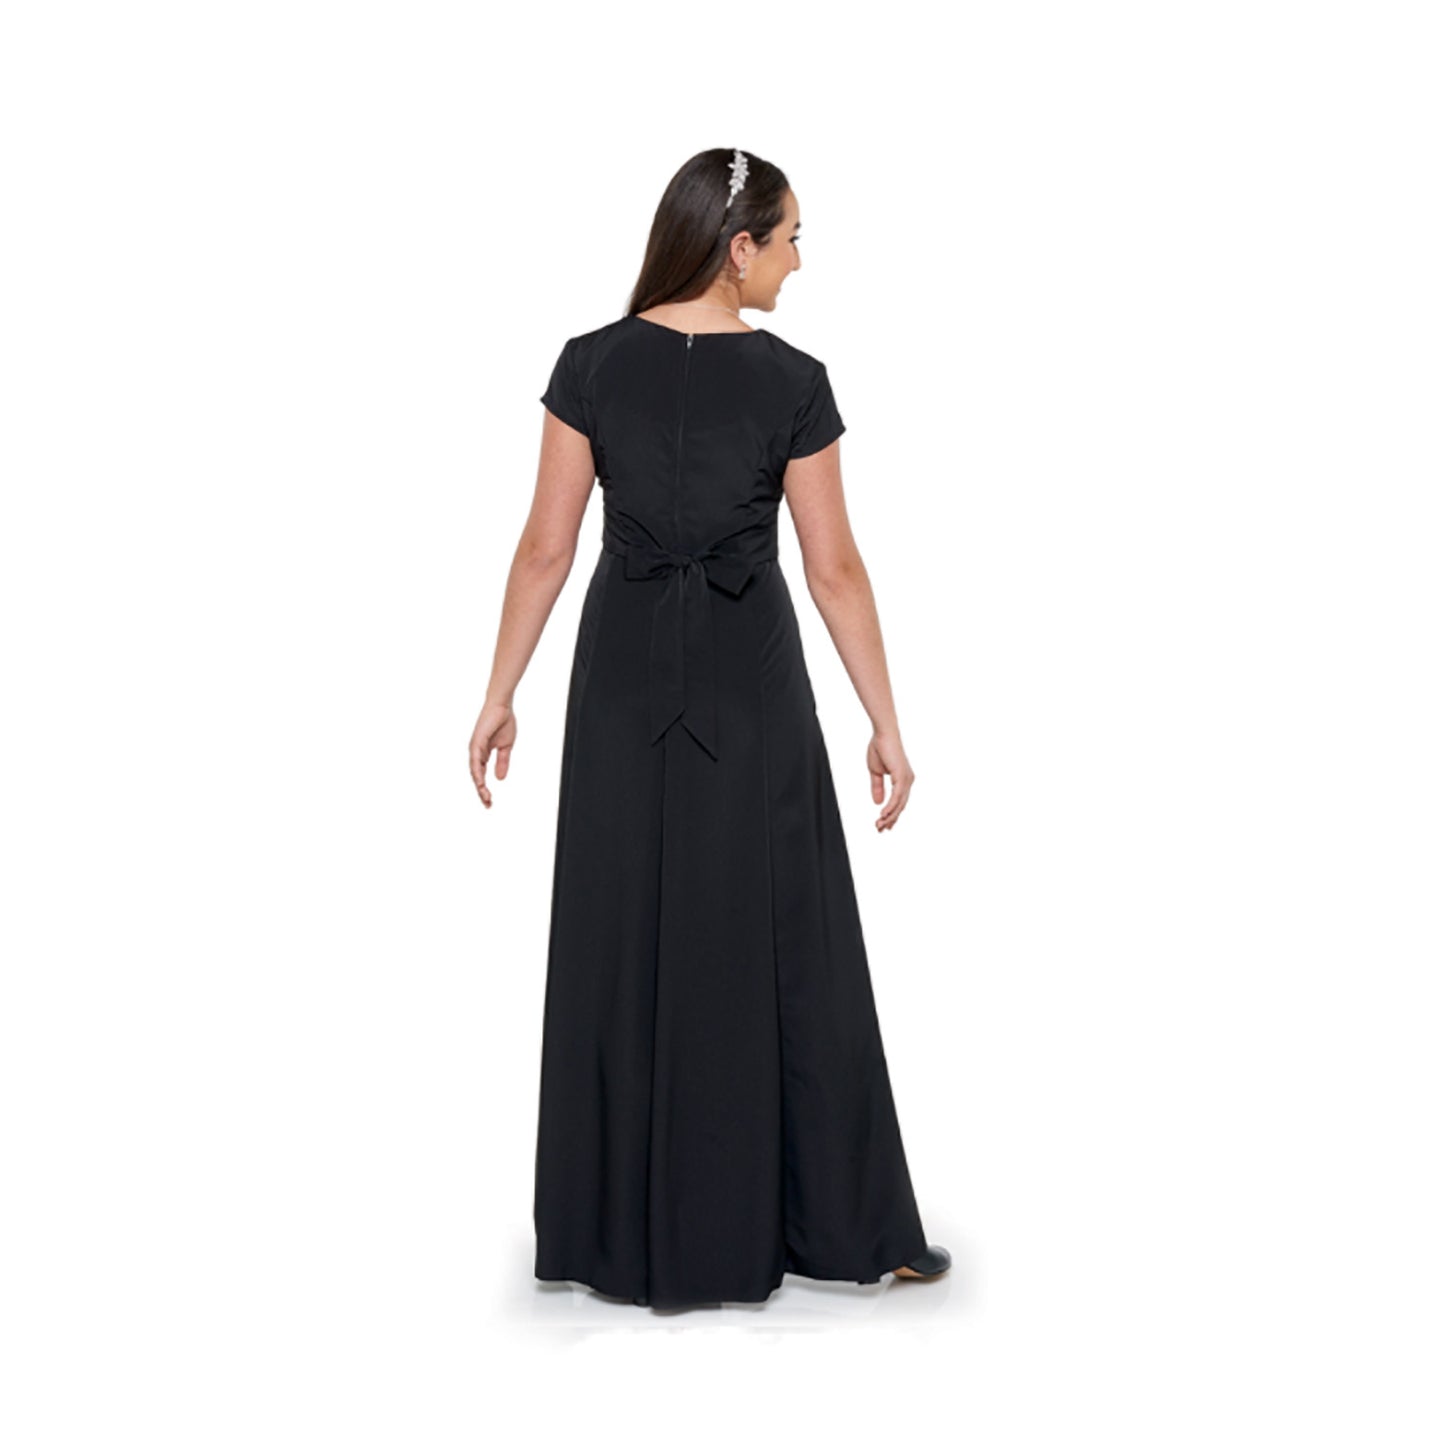 Sabrina Cap Sleeve V-Neck Dress (Adult & Youth)